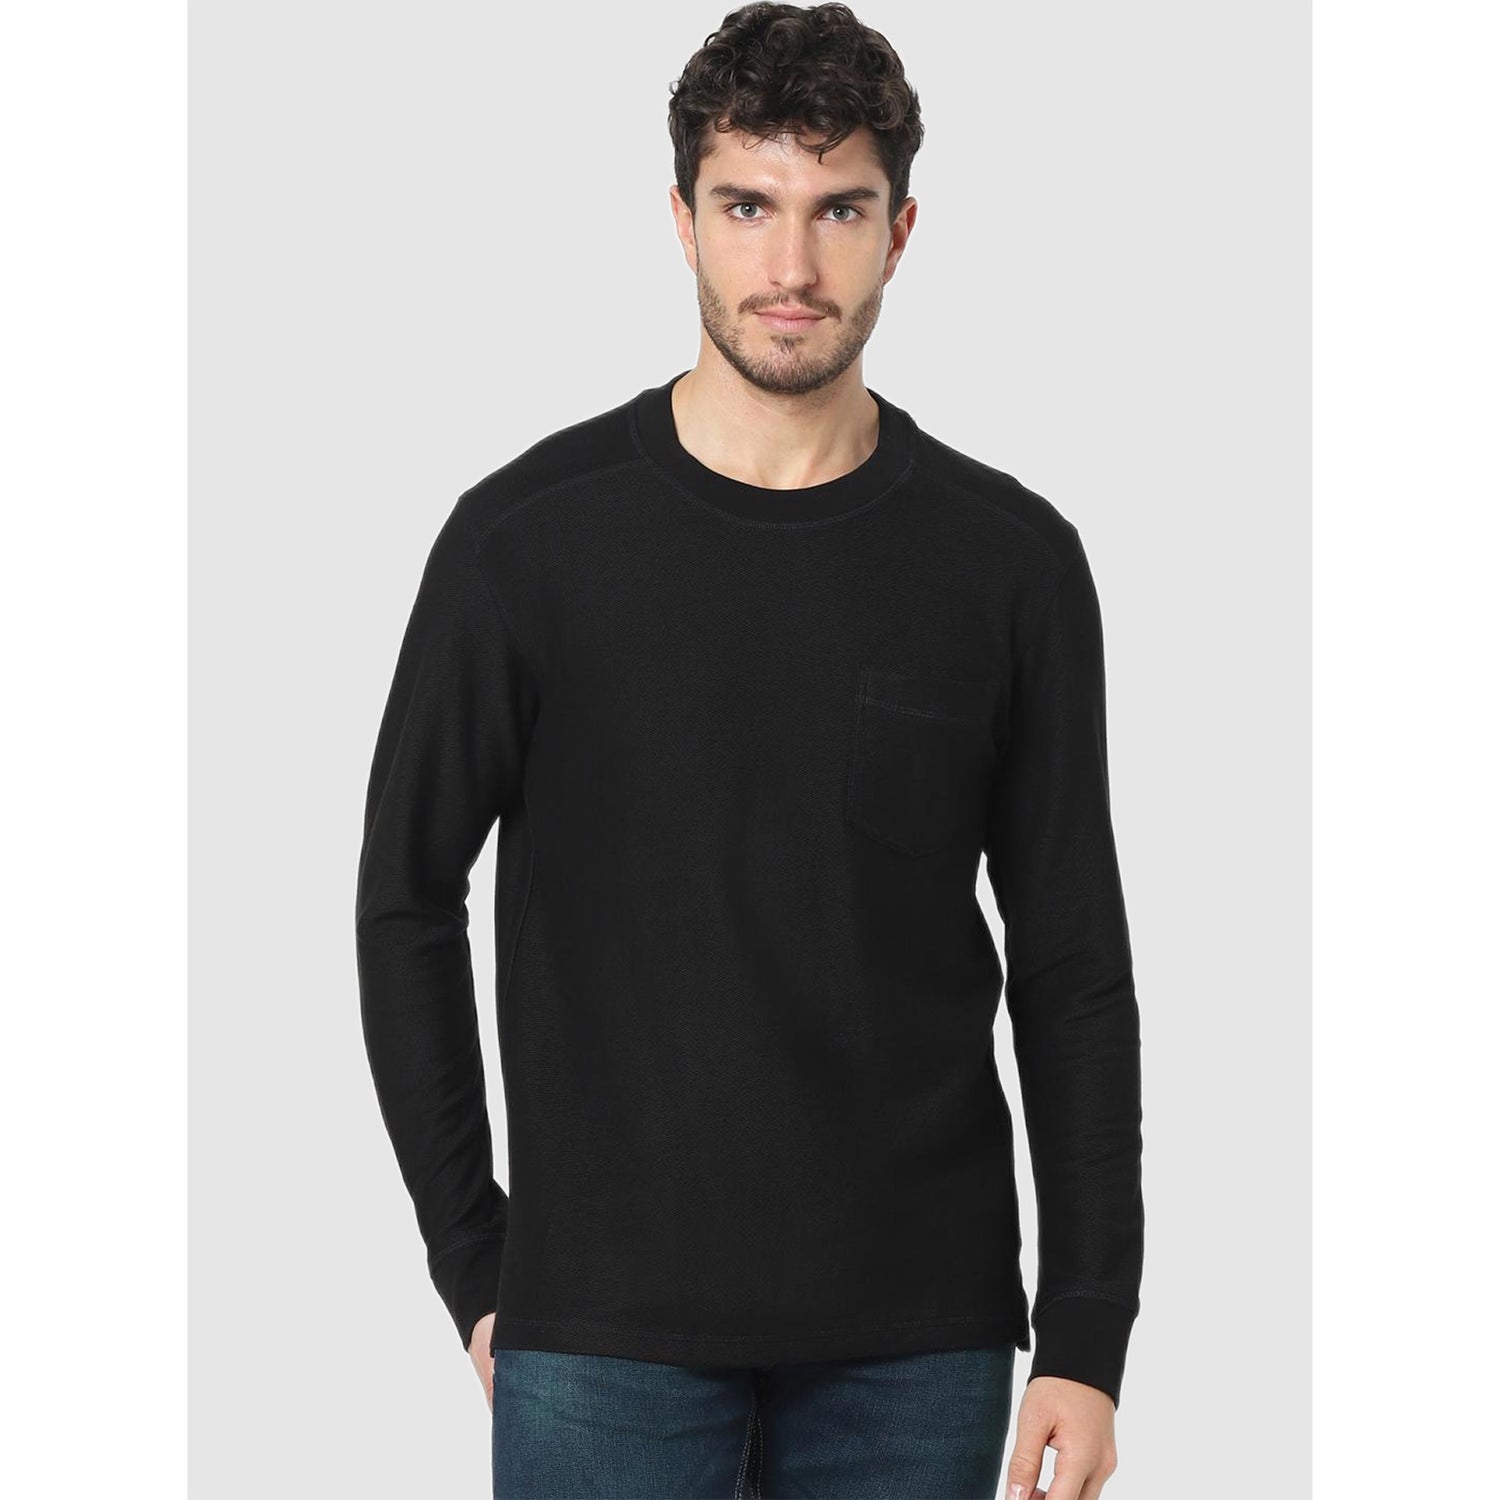 Men's Black Solid T-shirt (Various Sizes)